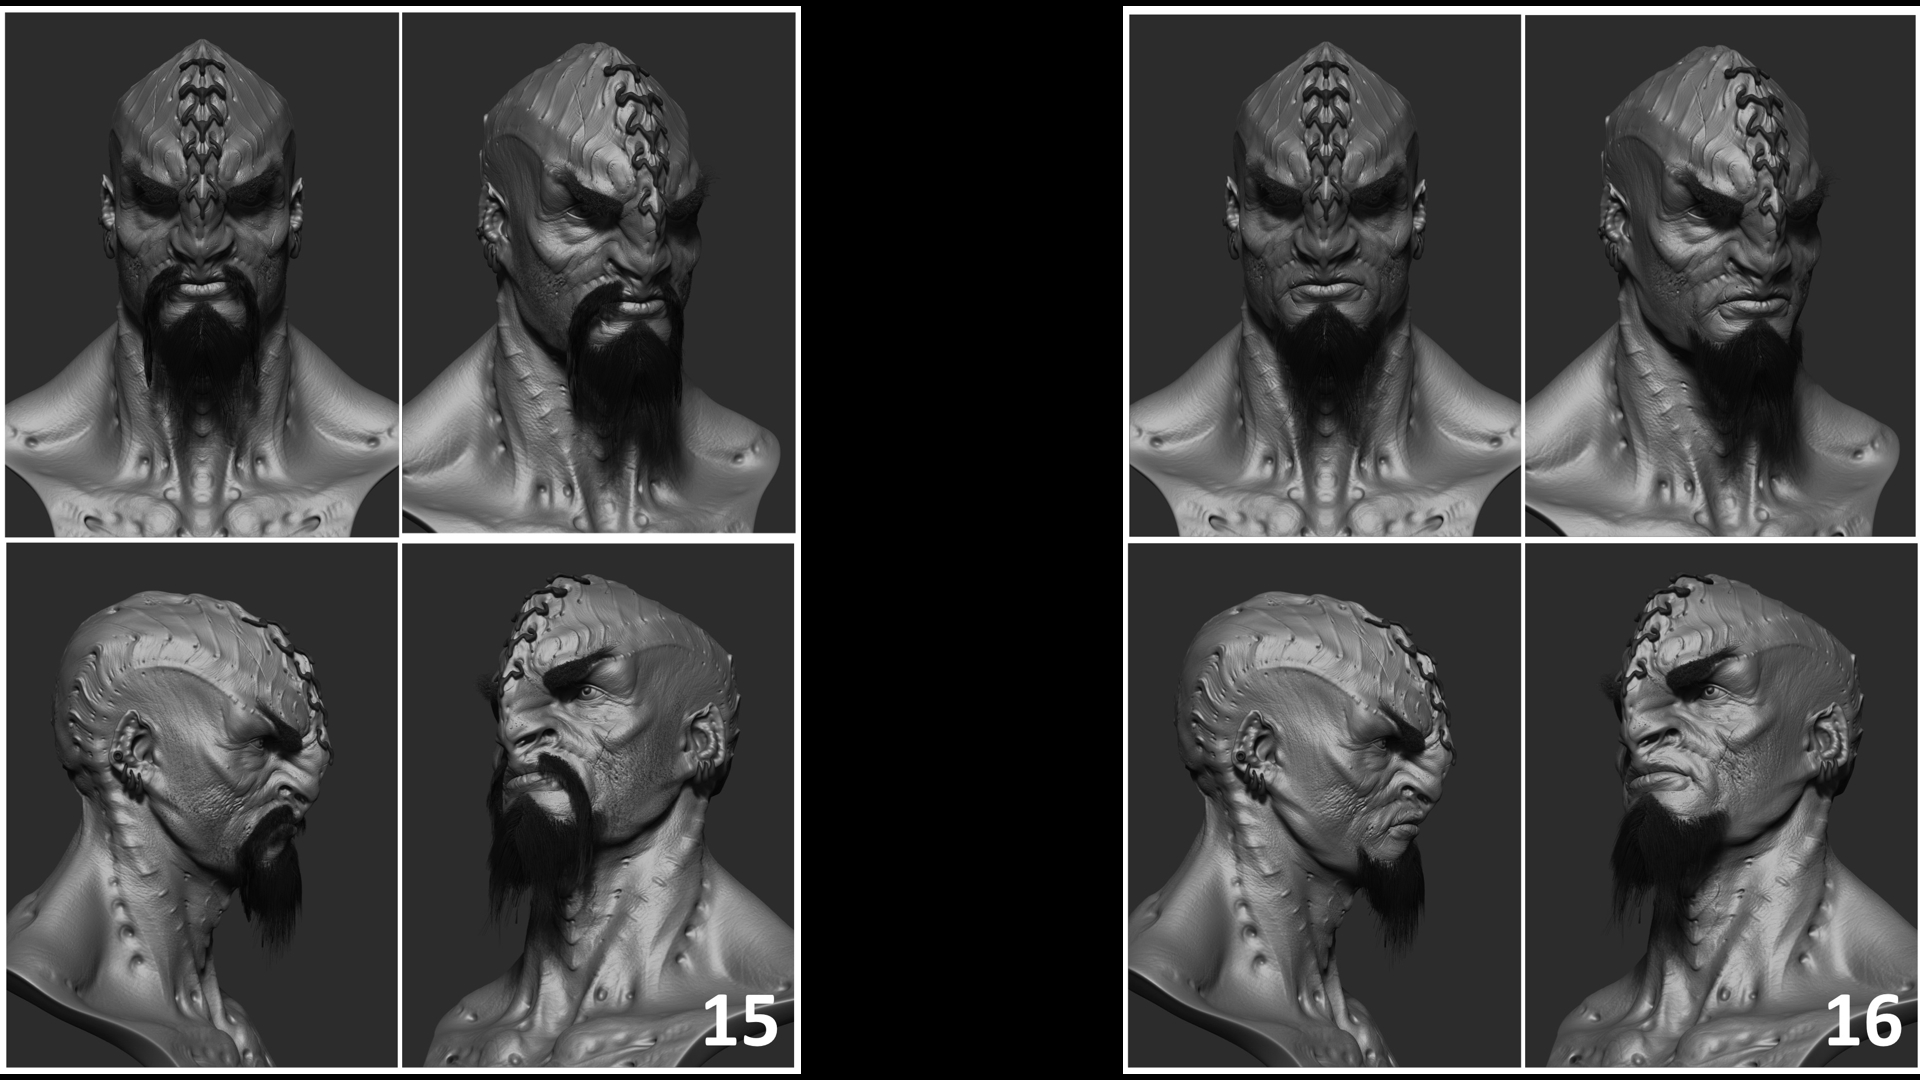 alternate-klingon-designs-for-star-trek-into-darkness-8.jpg